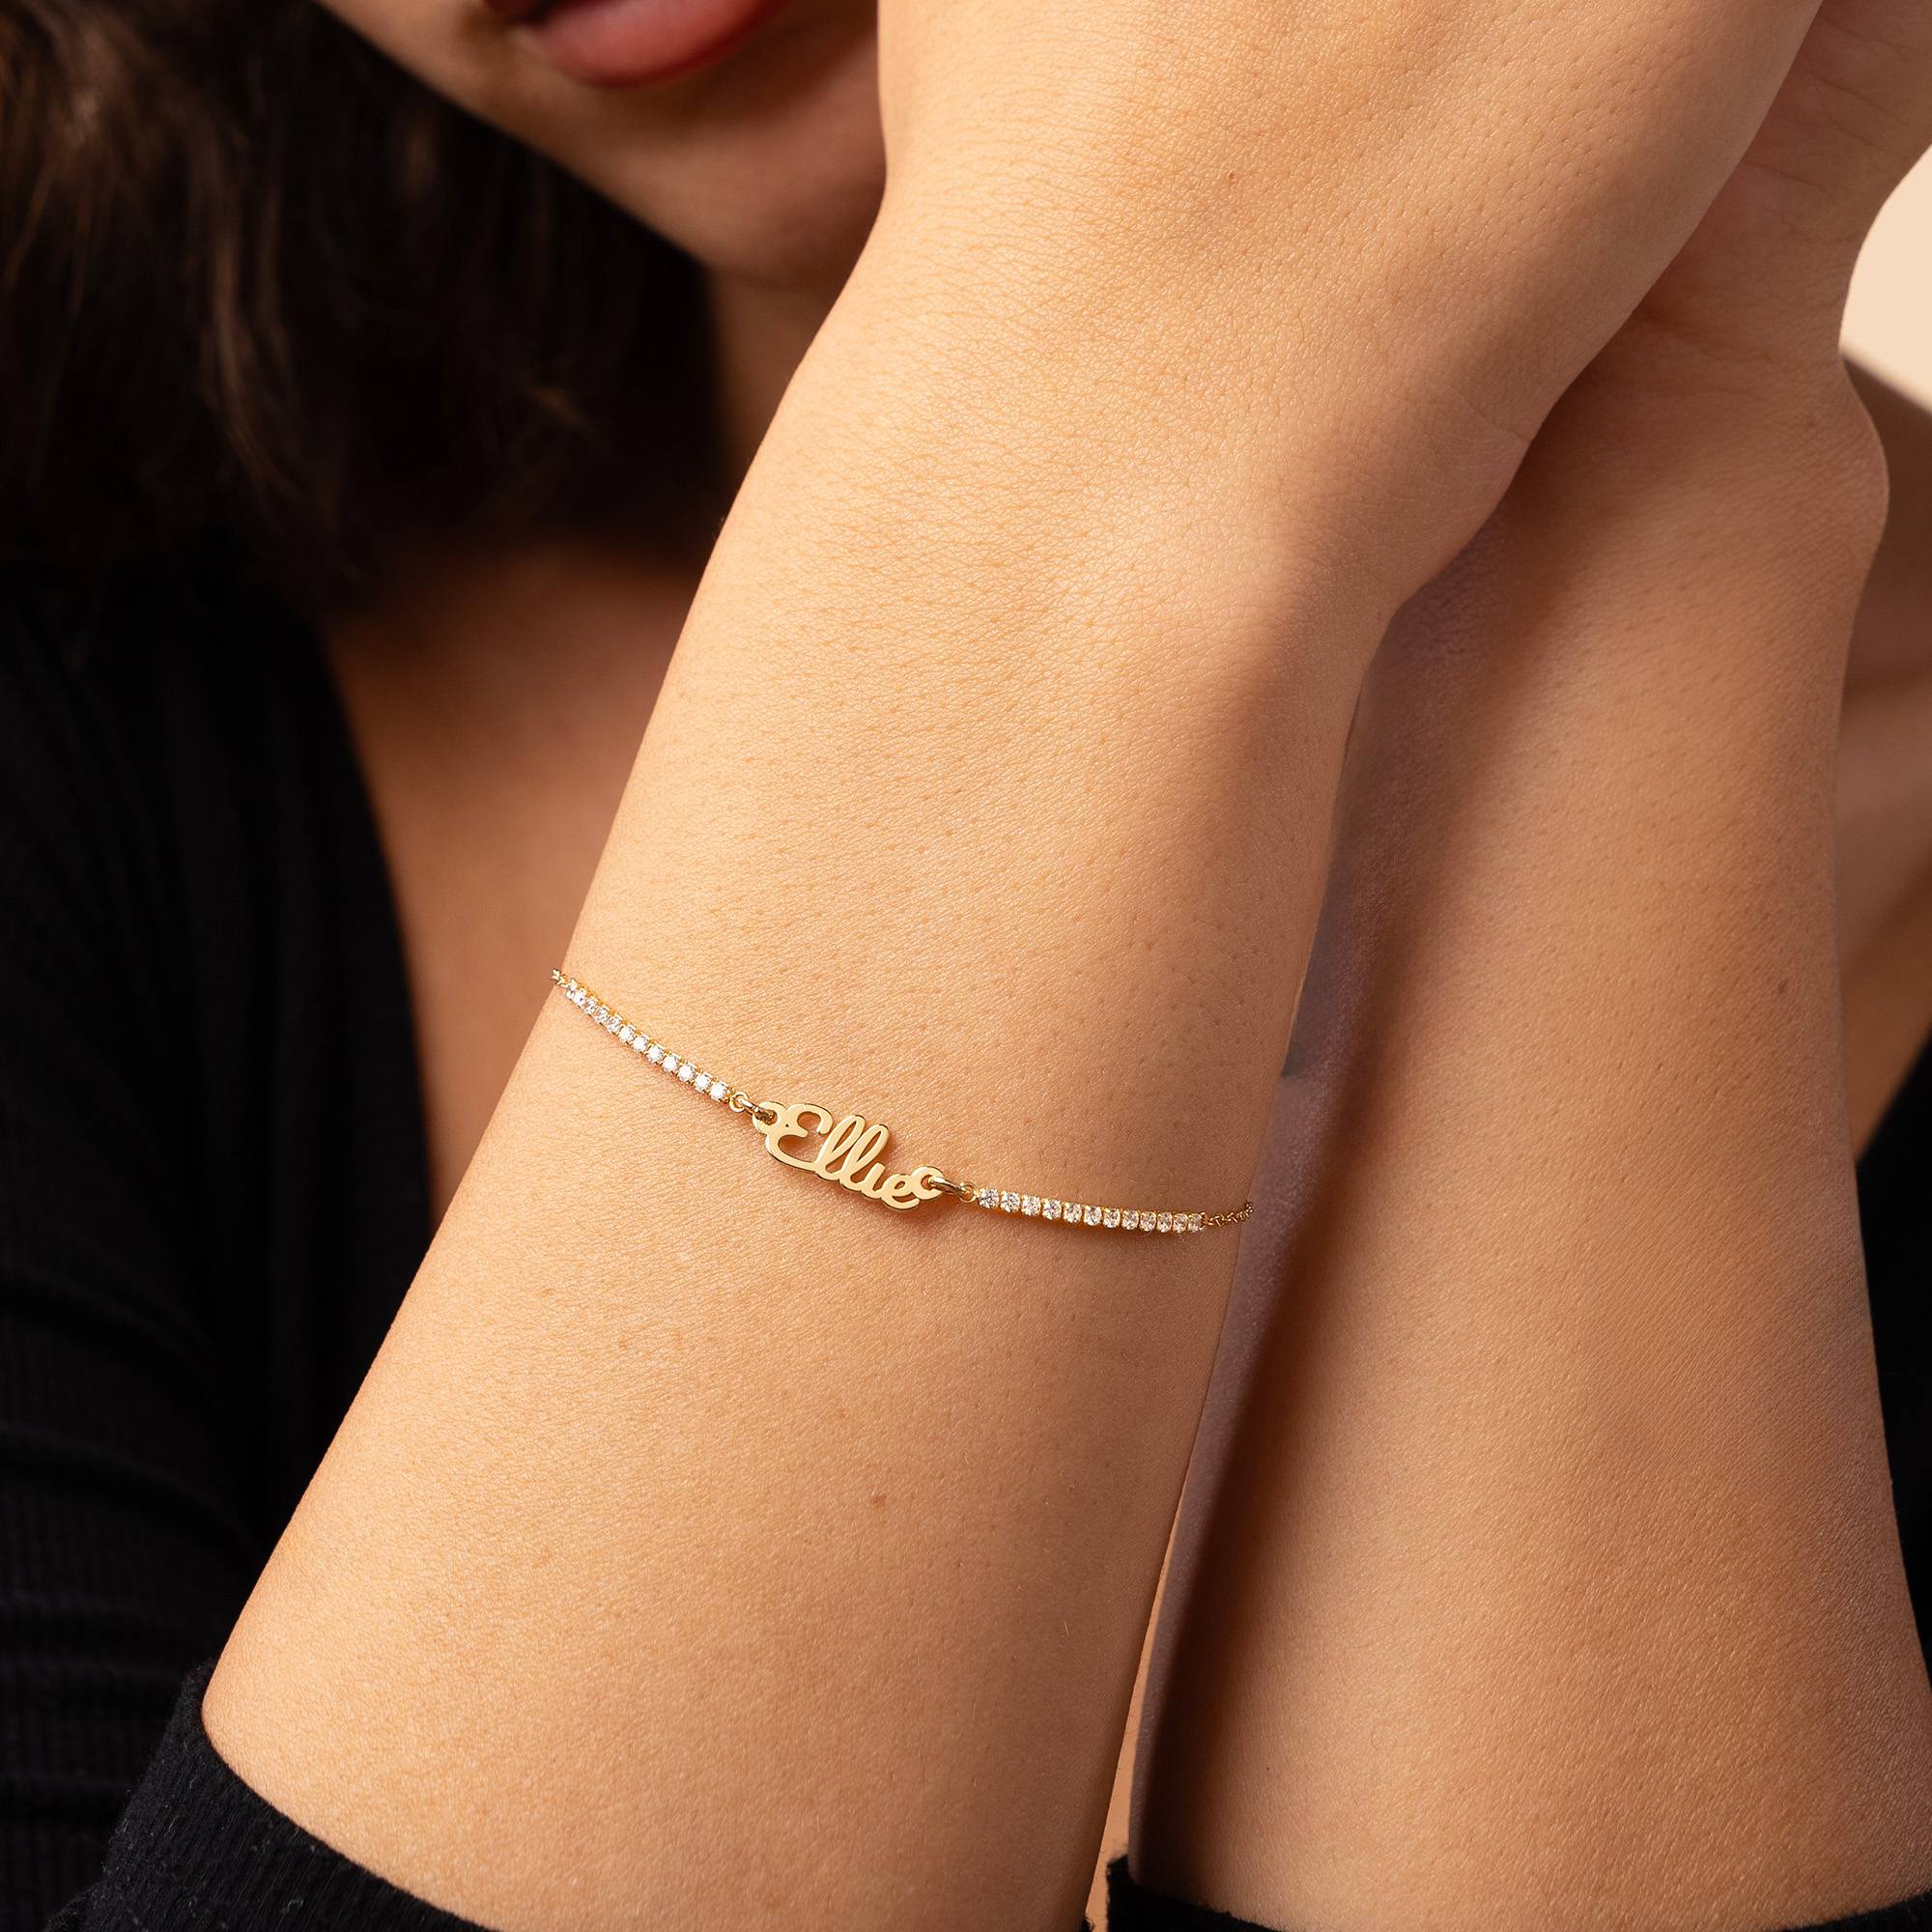 Kate Name Tennis Bracelet in 18K Gold Vermeil-1 product photo